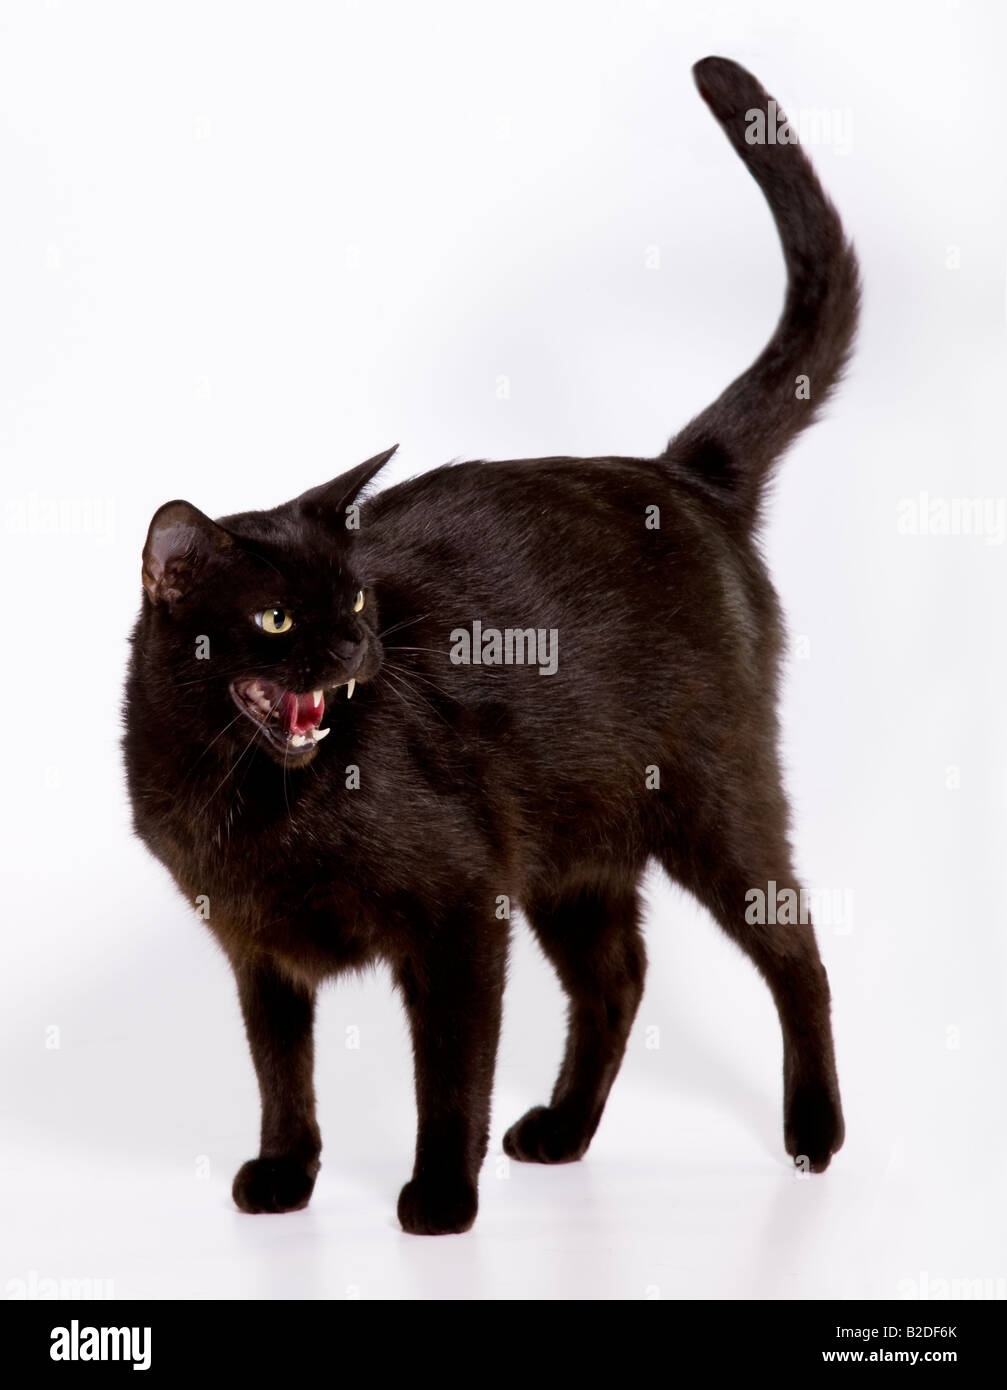 A black cat strikes a defensive pose Stock Photo